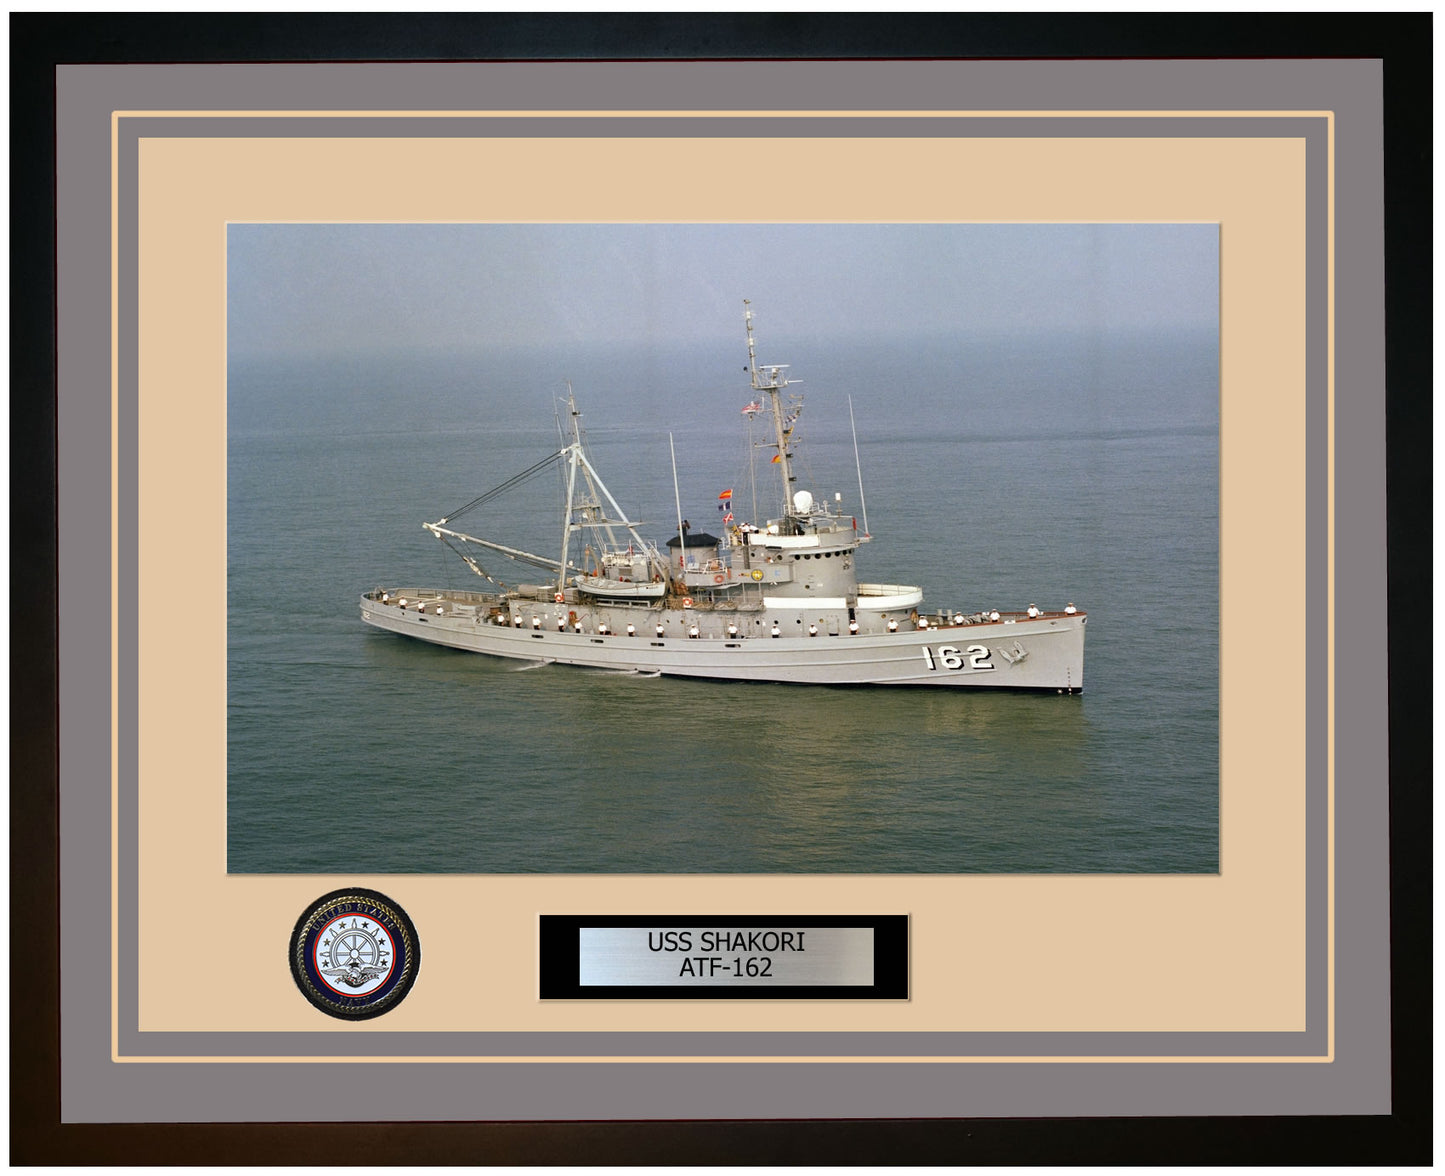 USS SHAKORI ATF-162 Framed Navy Ship Photo Grey